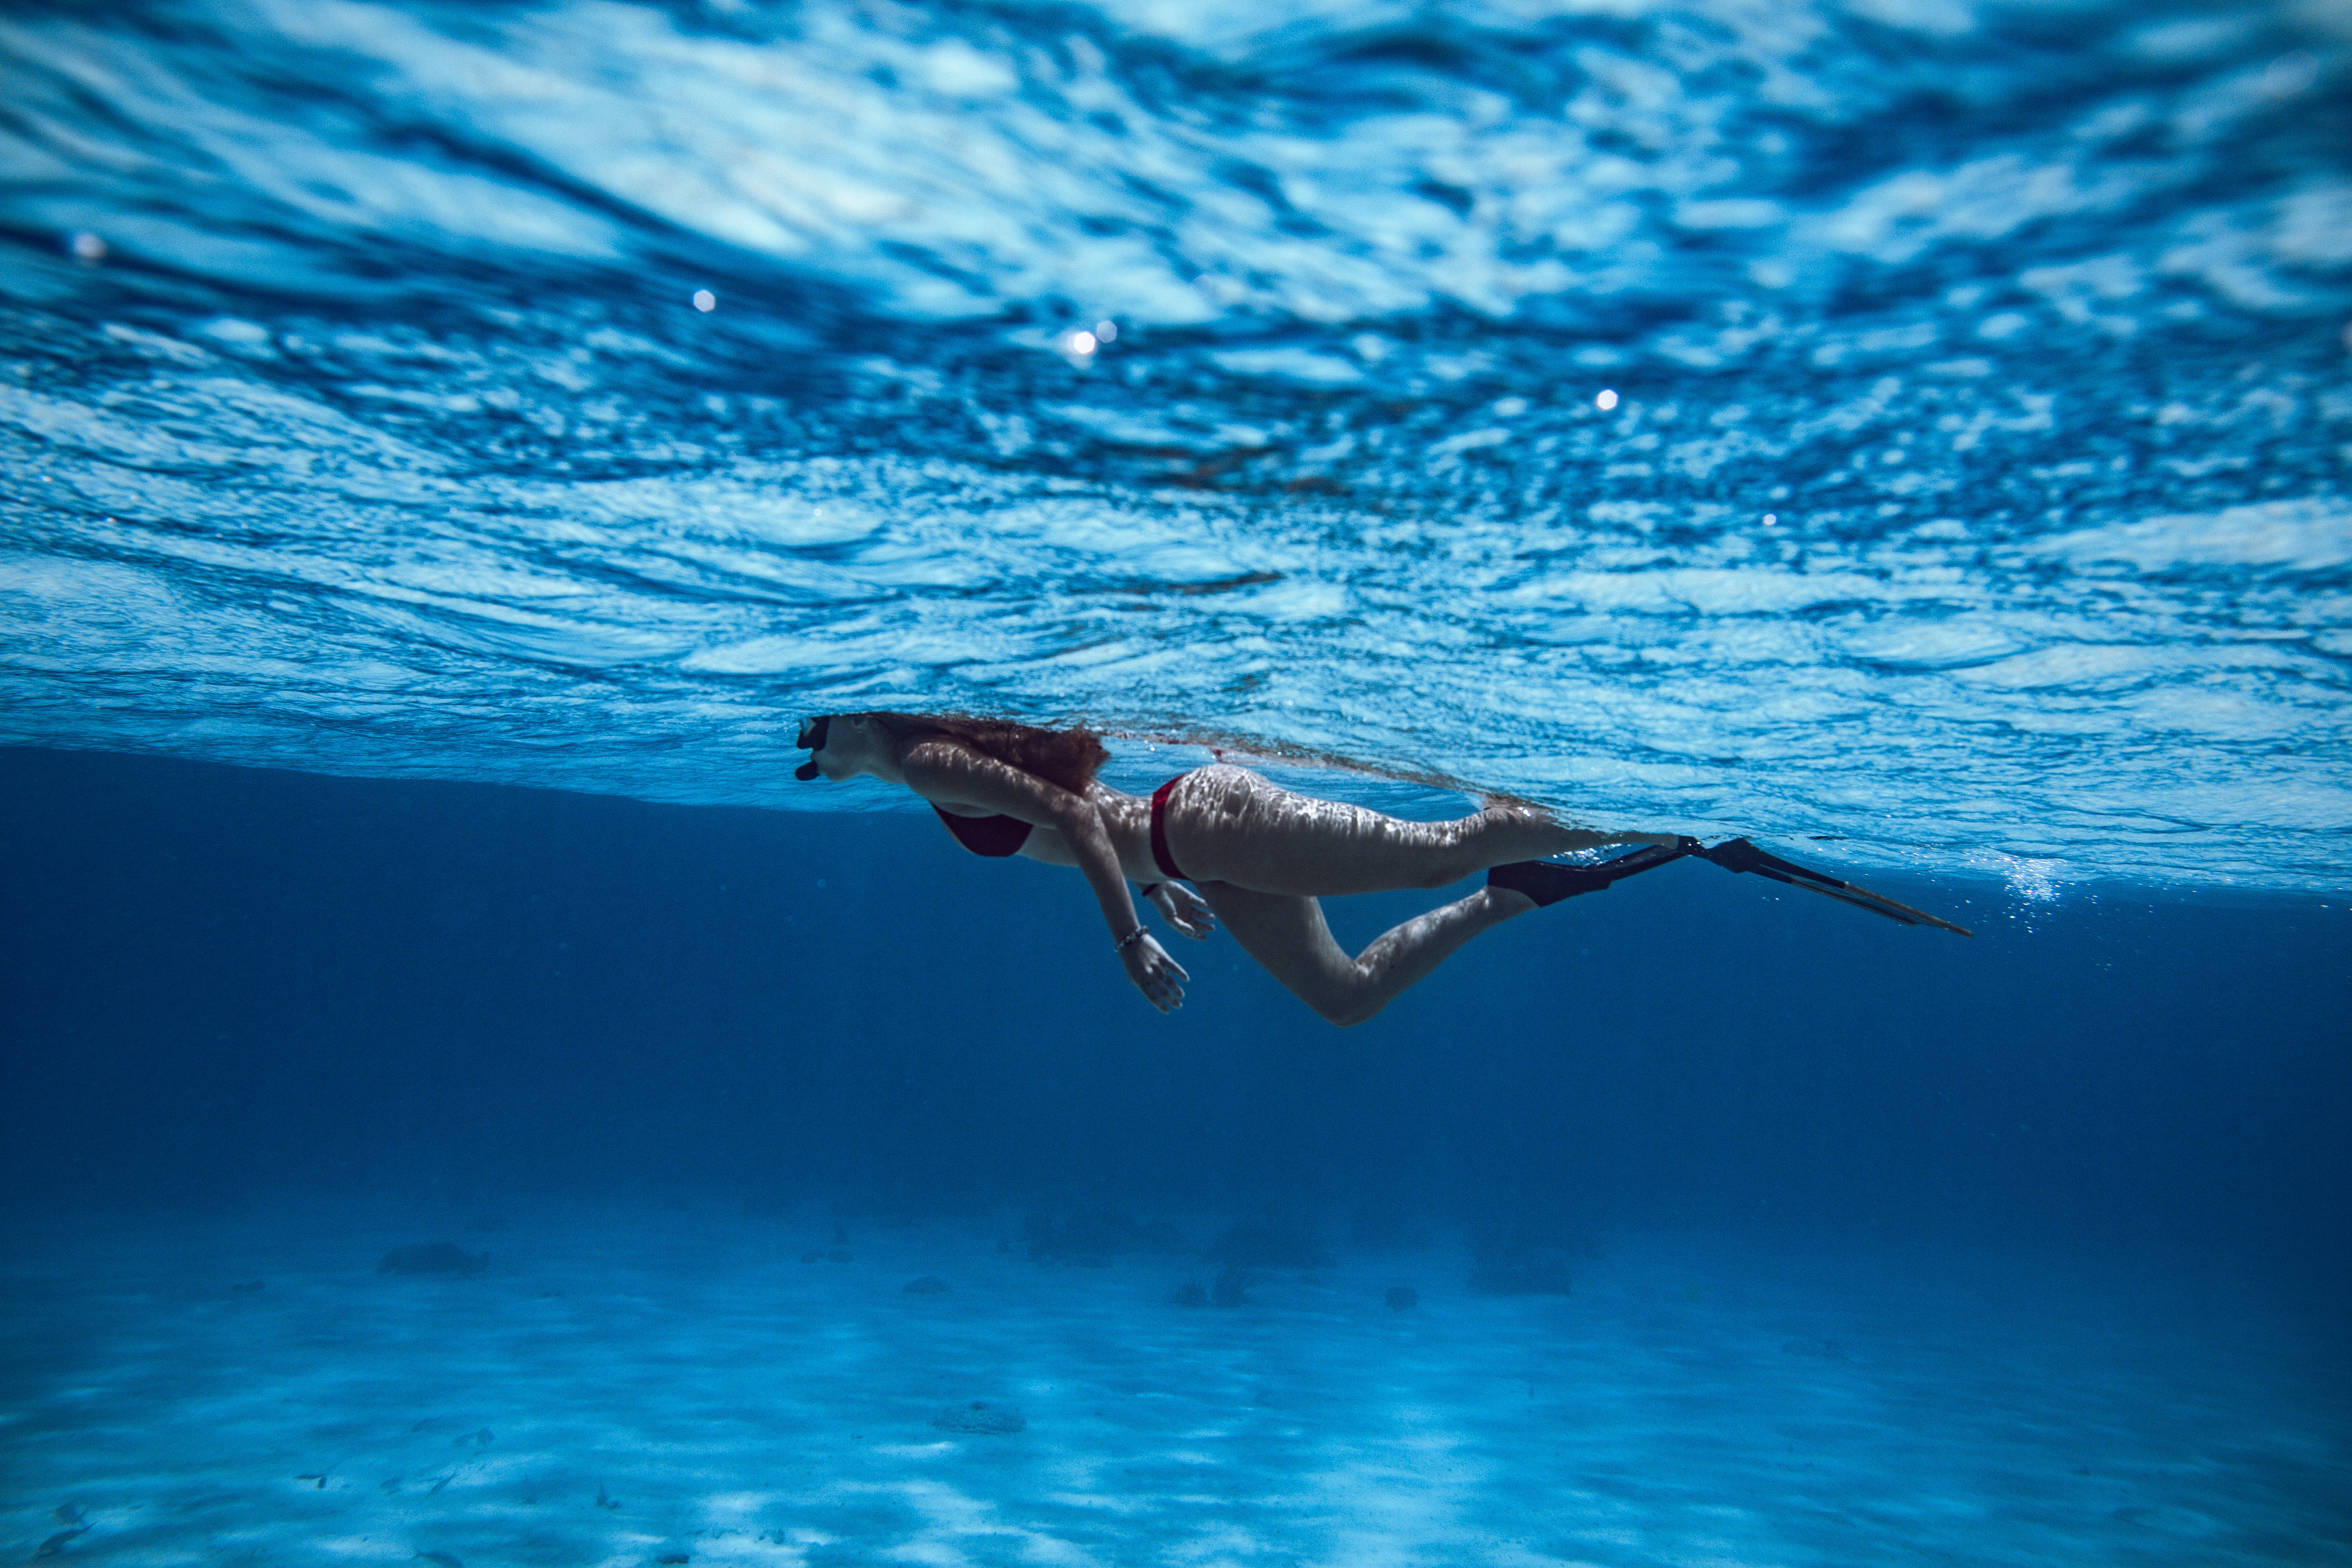 Woman snorkeling in the ocean as a fun ocean activity in the Caribbean